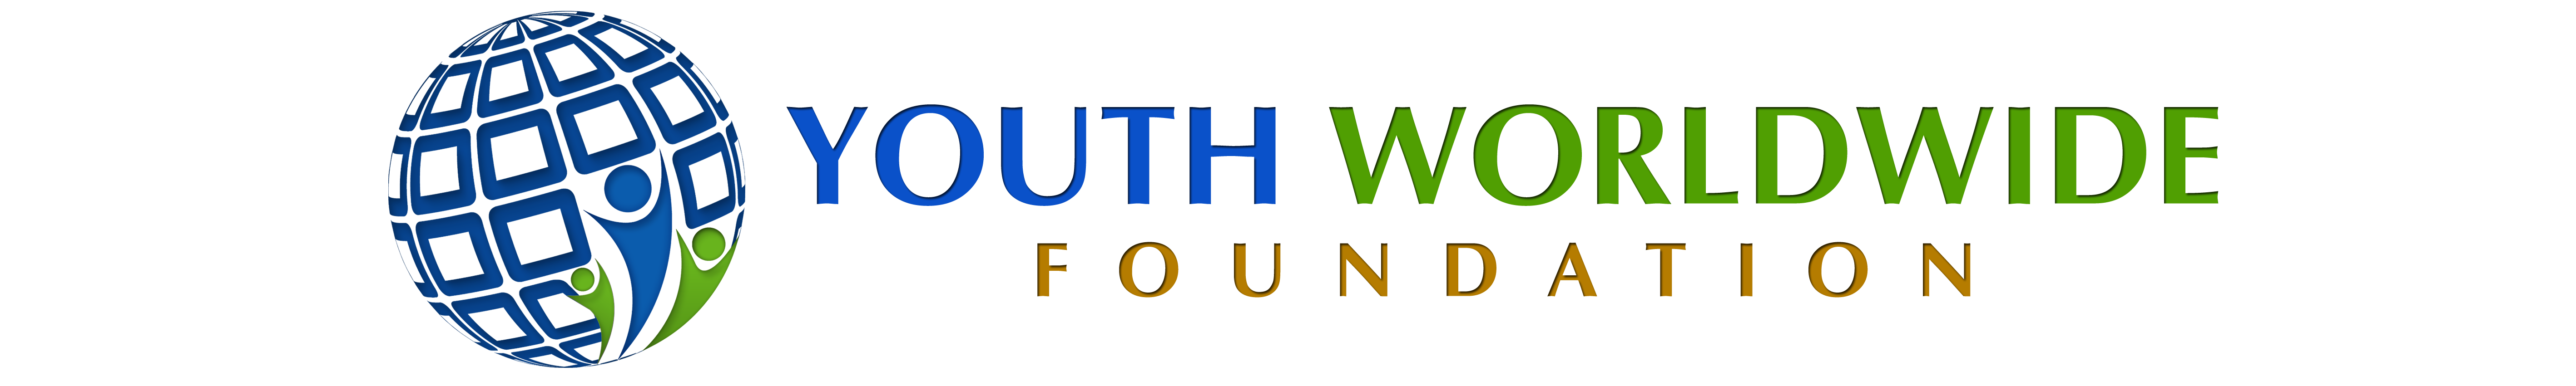 Youth Worldwide Foundation